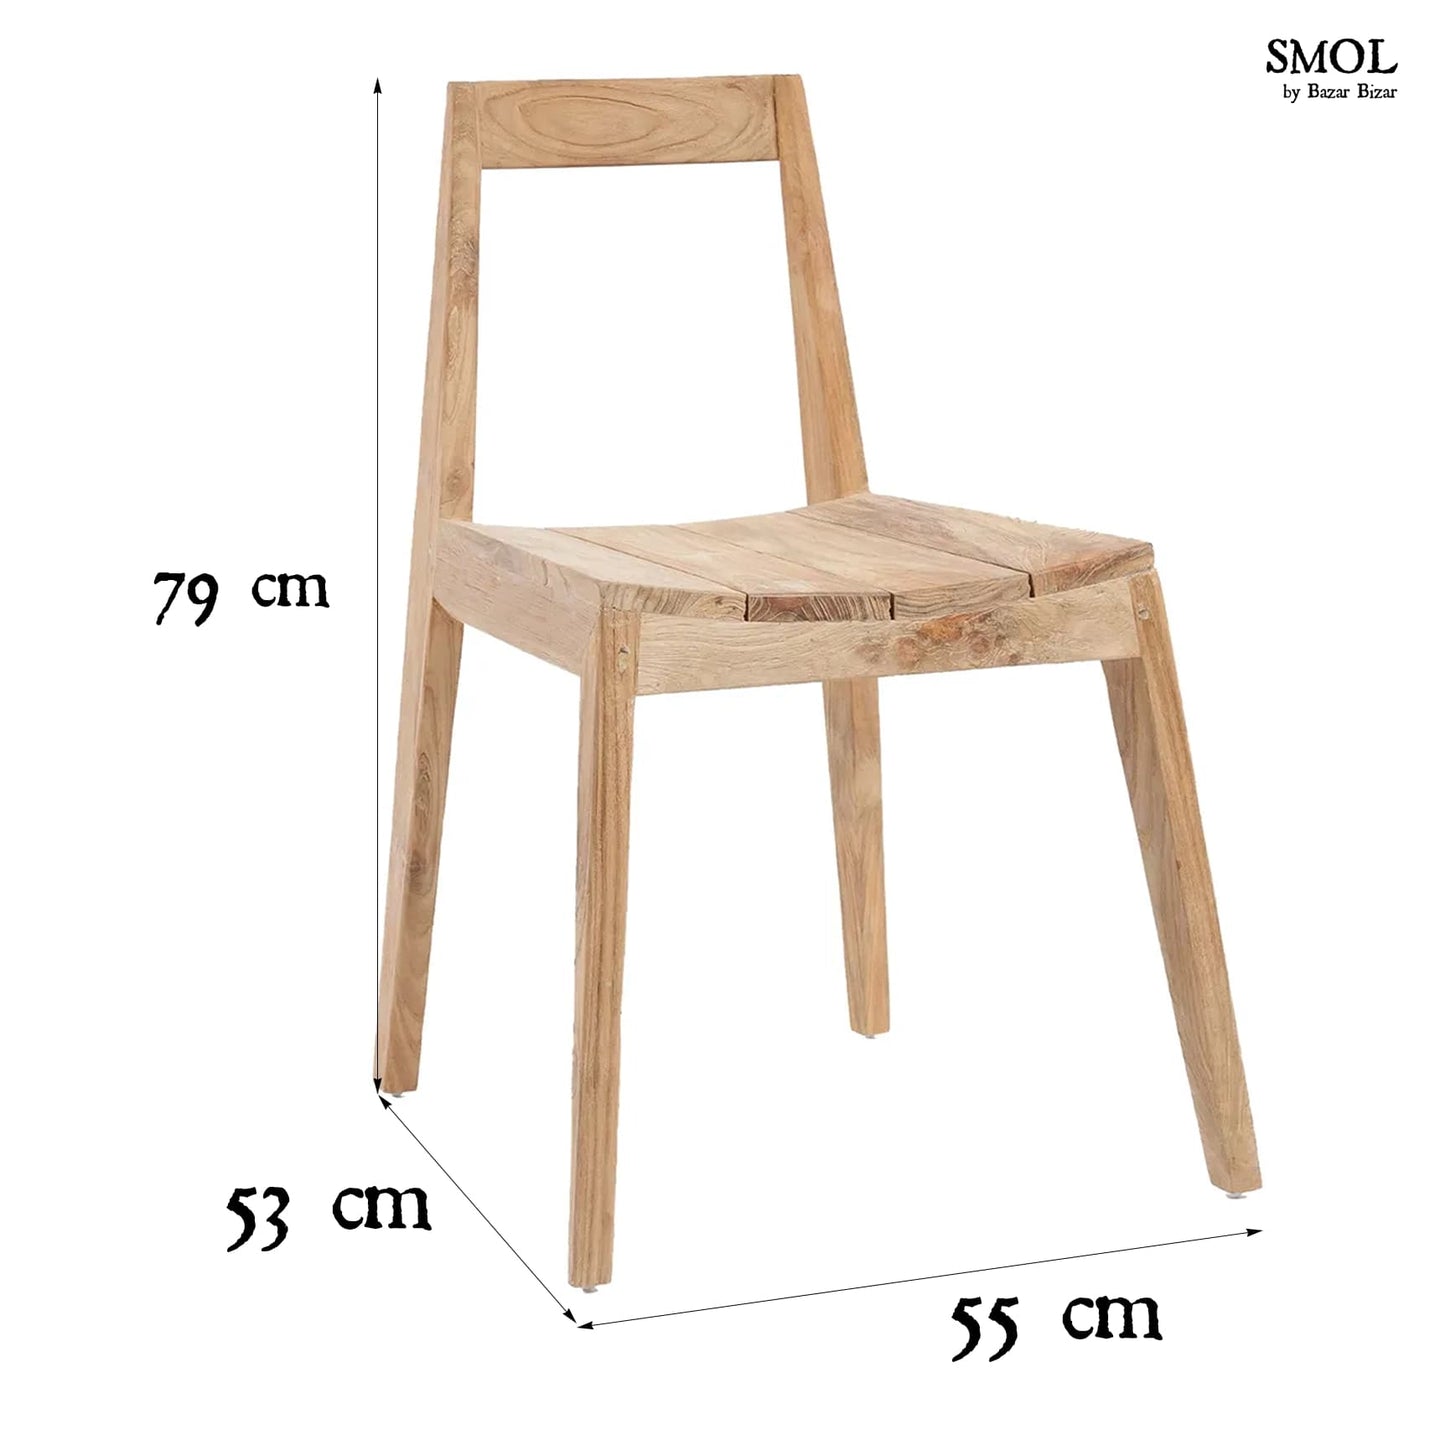 smol.hu- PAXI, natúr, fa szék, 79 cm méretekkel